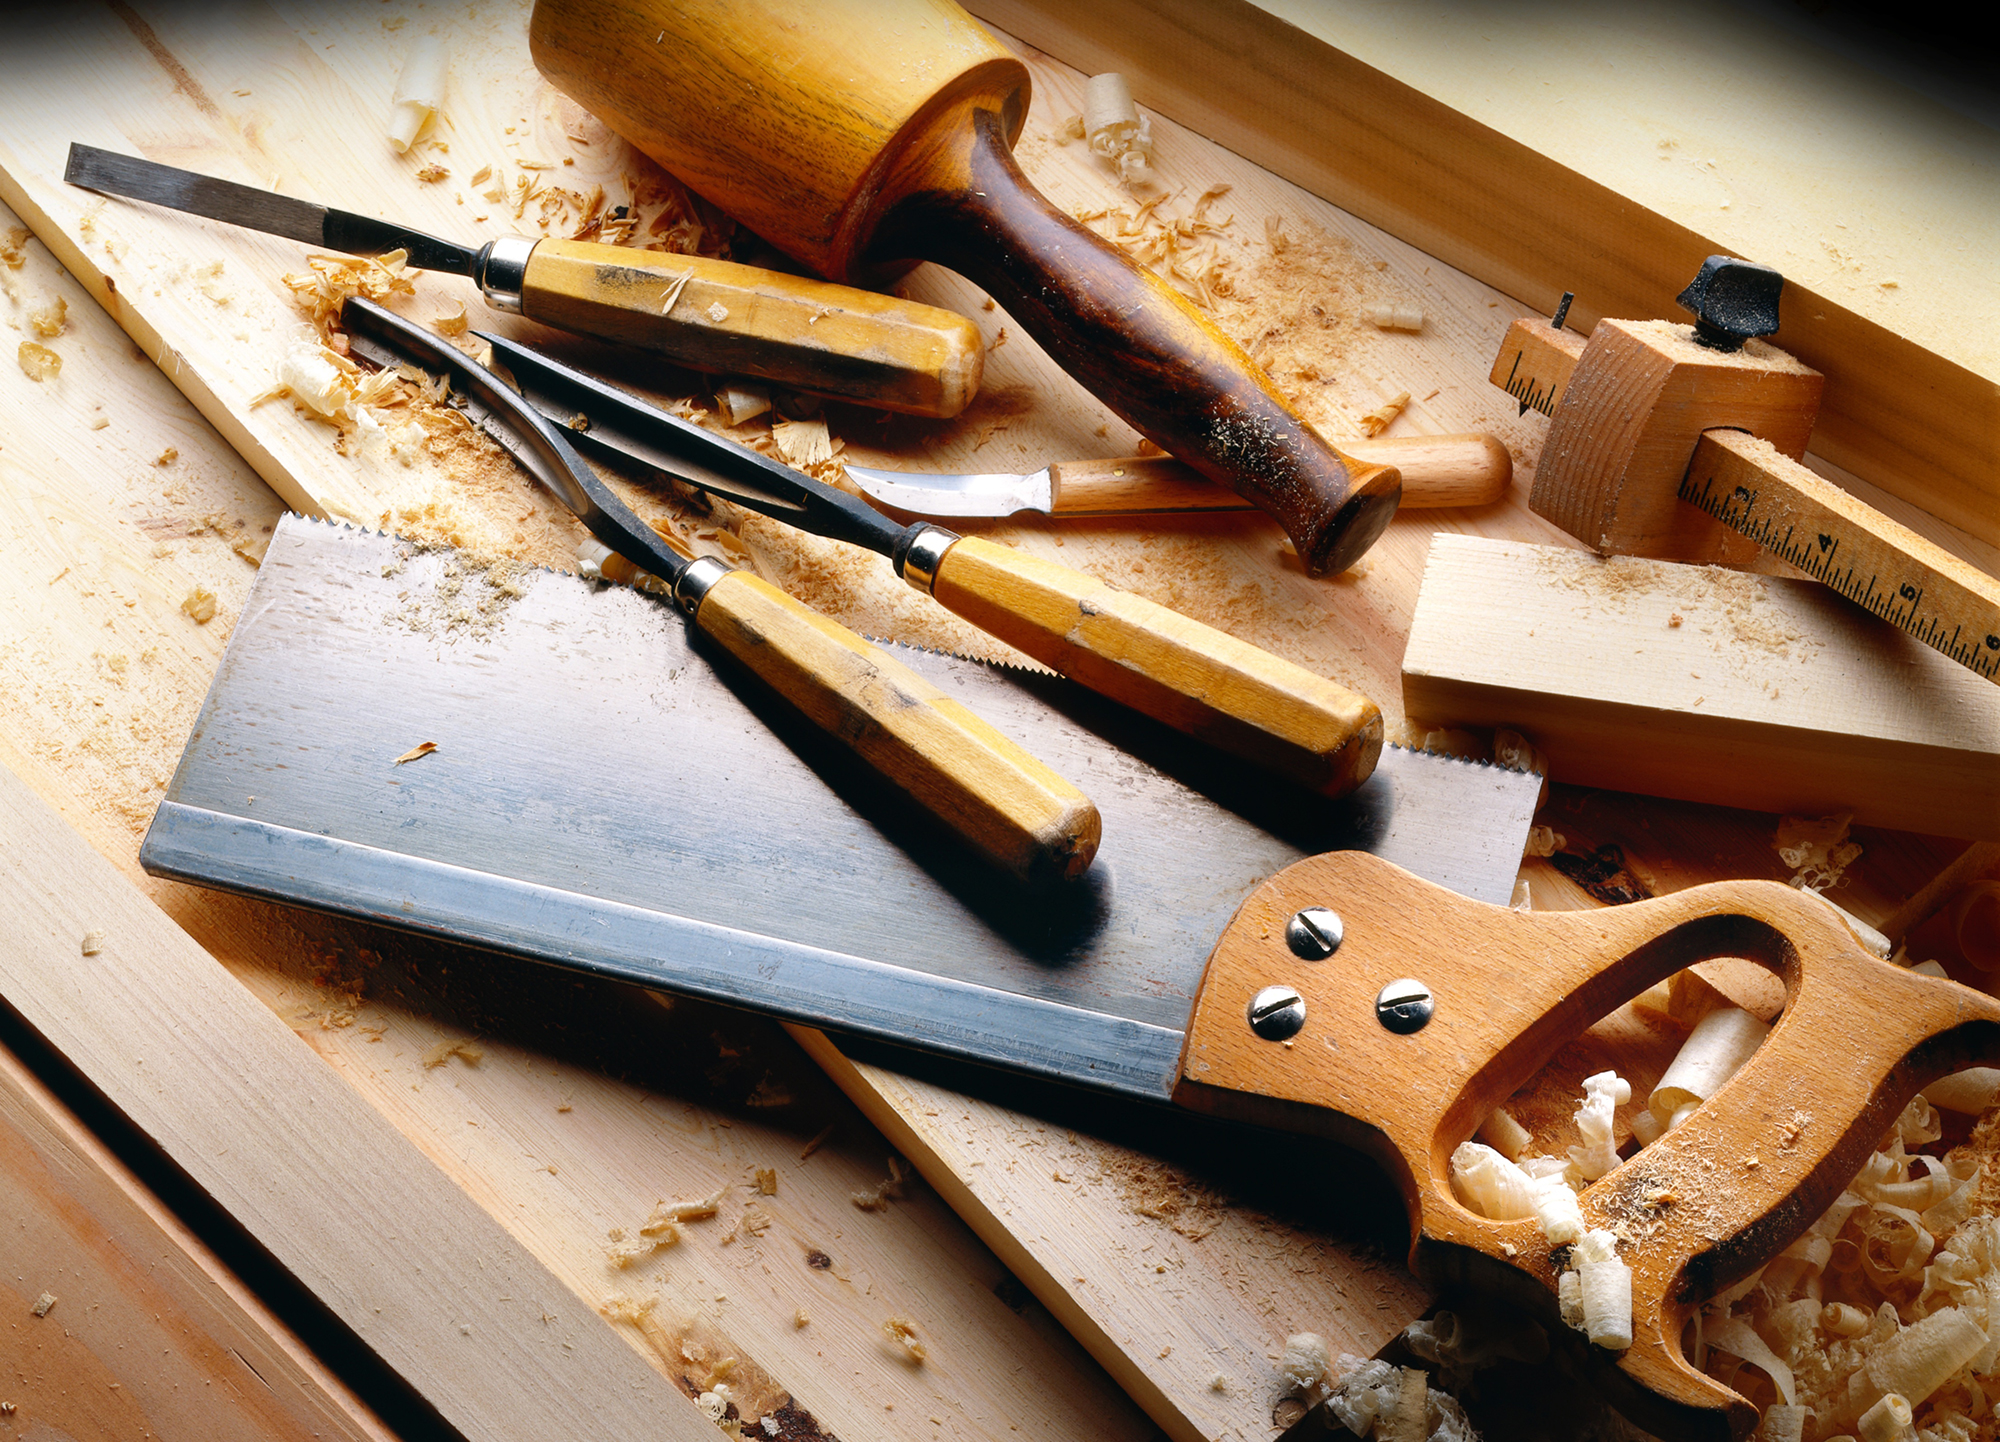 Build Basics: Carpentry - Build It